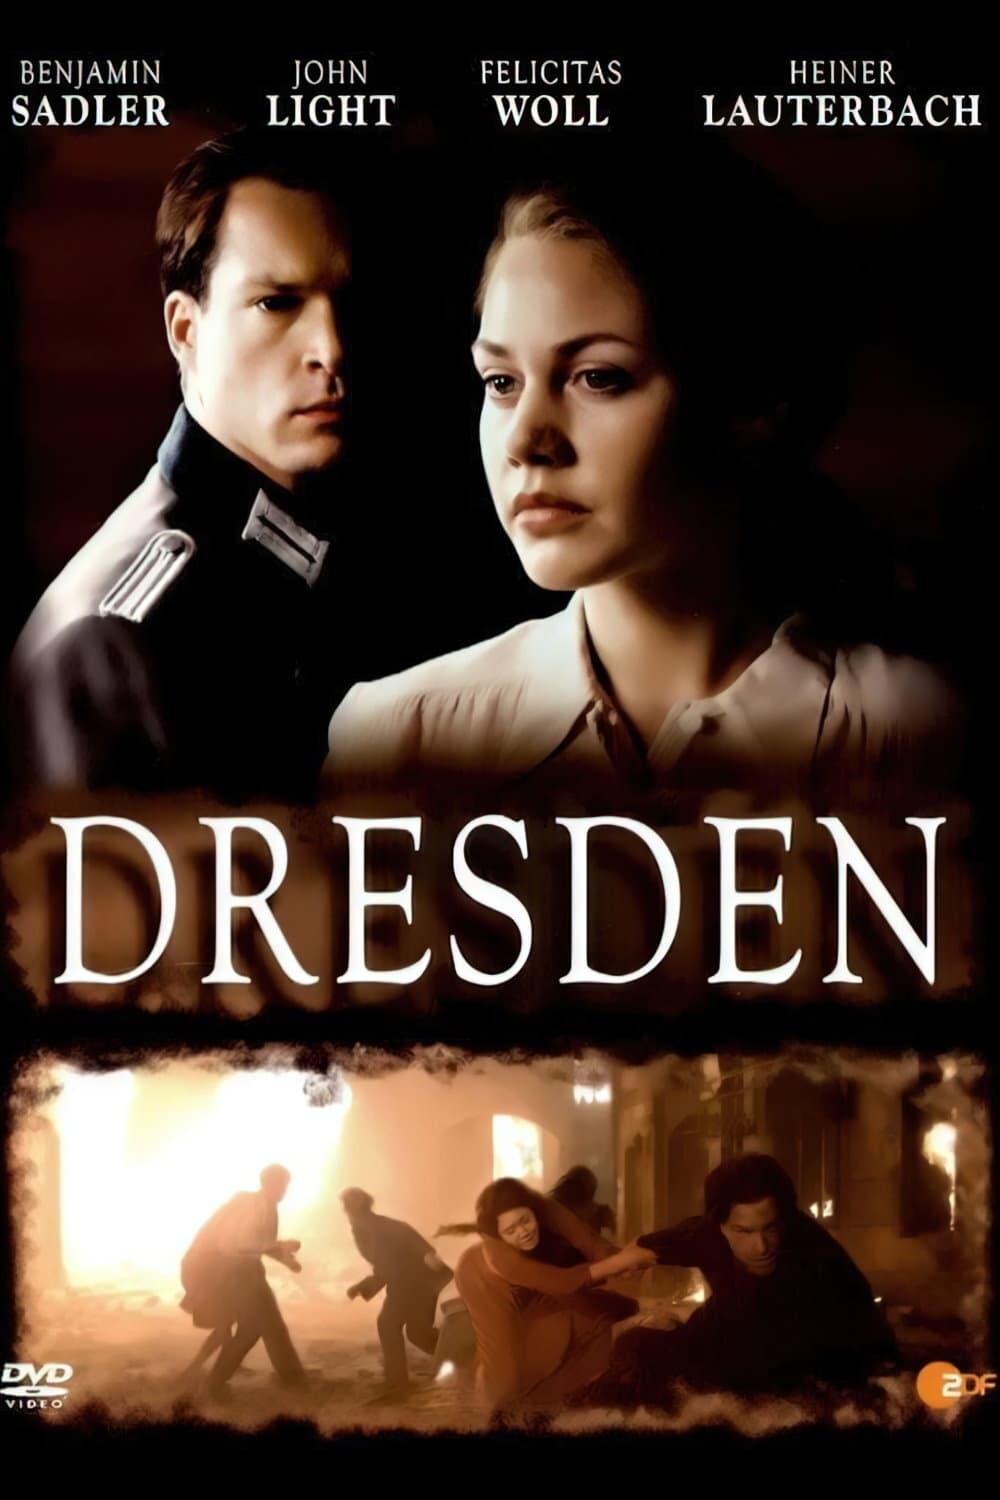 Dresden poster